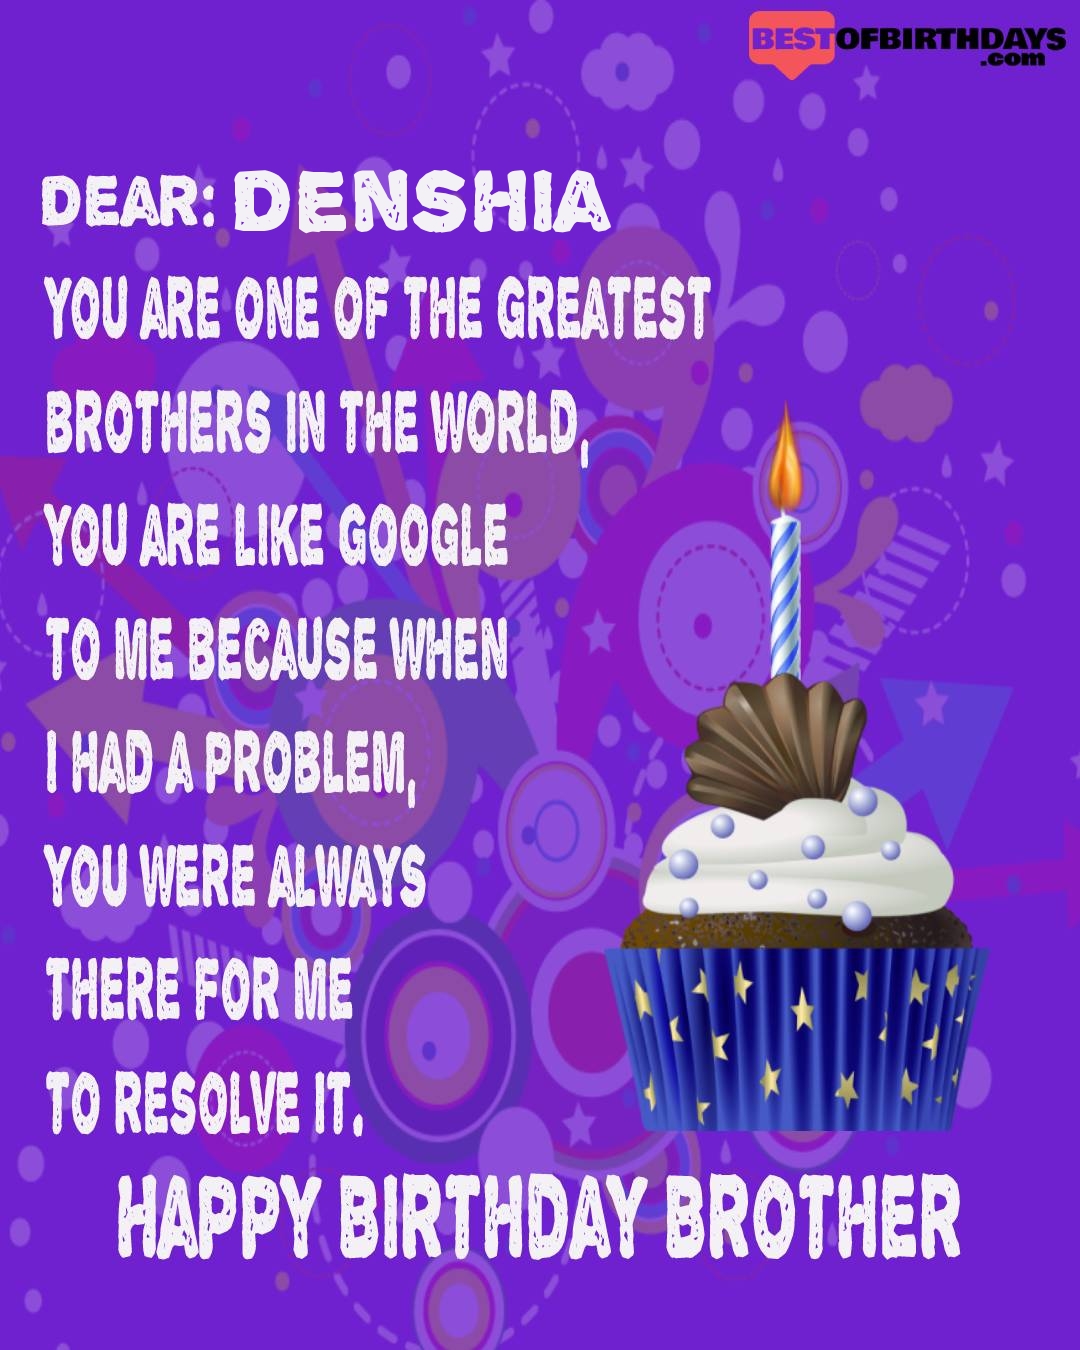 Happy birthday denshia bhai brother bro